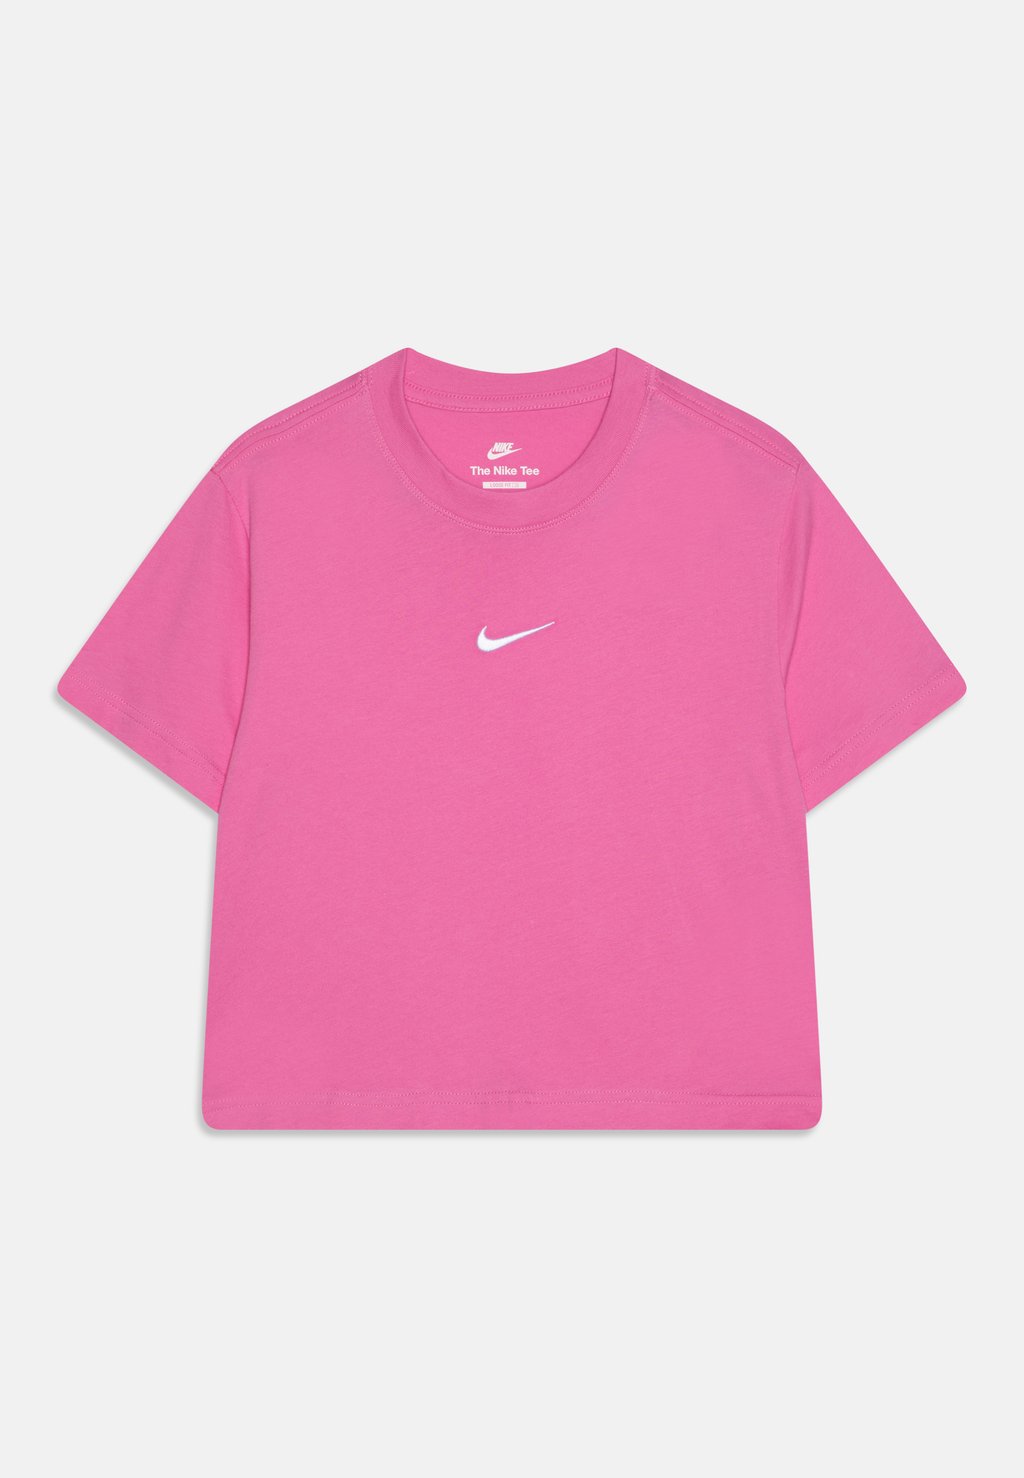 Футболка базовая TEE Nike Sportswear, цвет playful pink/white леггинсы universa nike цвет playful pink